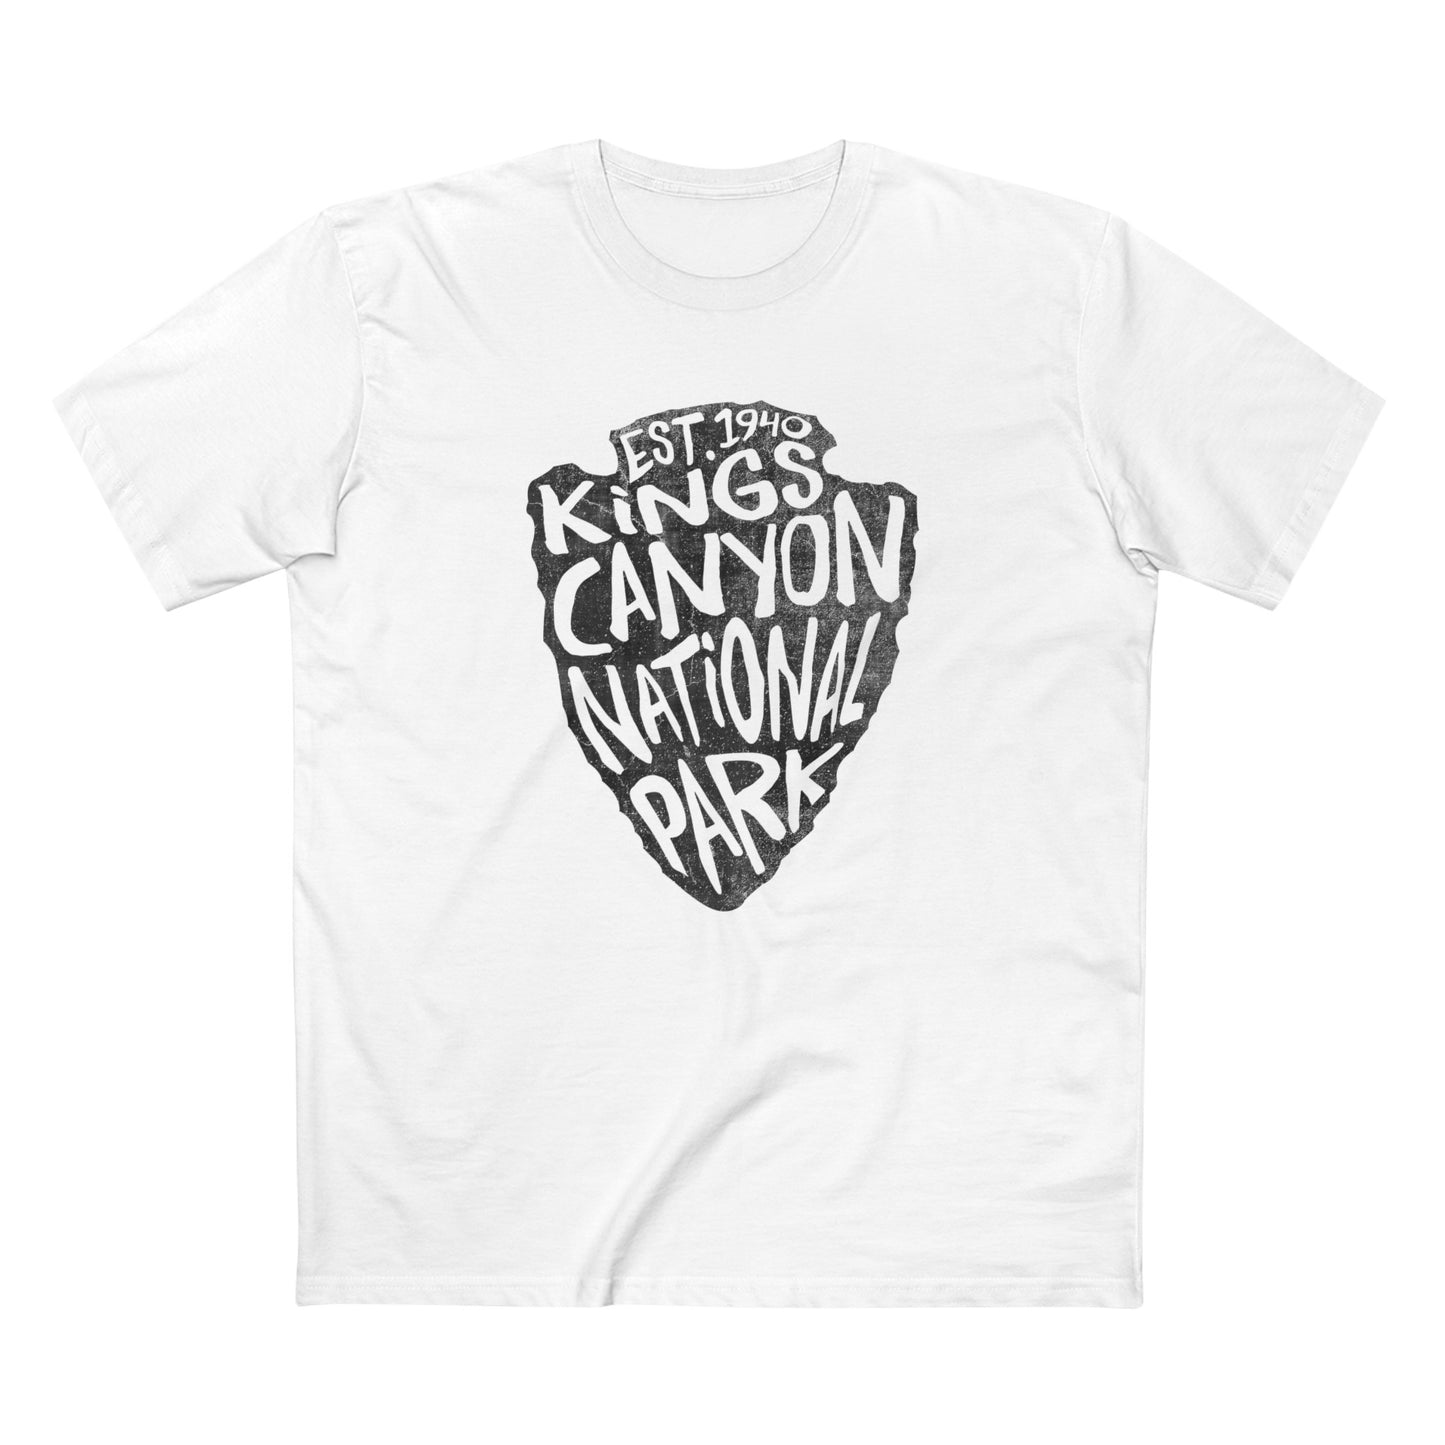 Kings Canyon National Park T-Shirt - Arrowhead Design